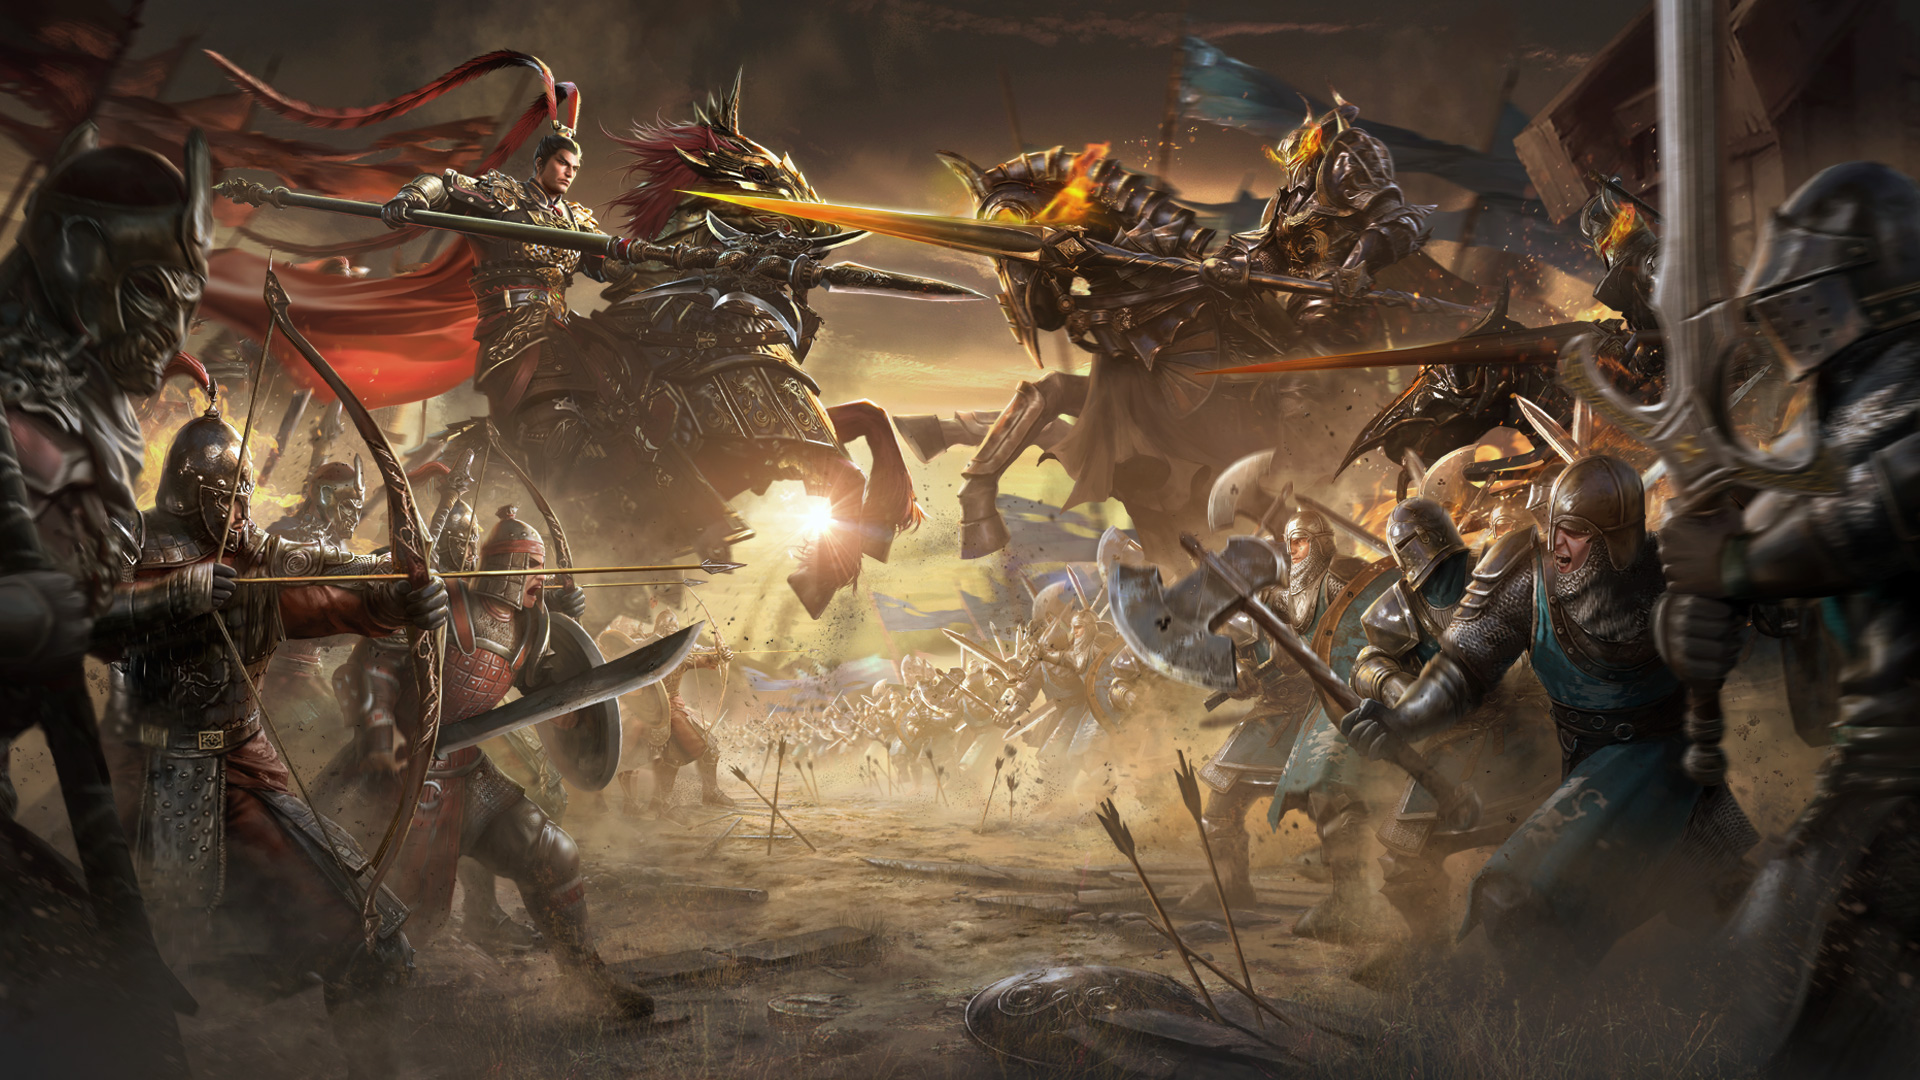 General 1920x1080 Blood of Steel video games fantasy art battle